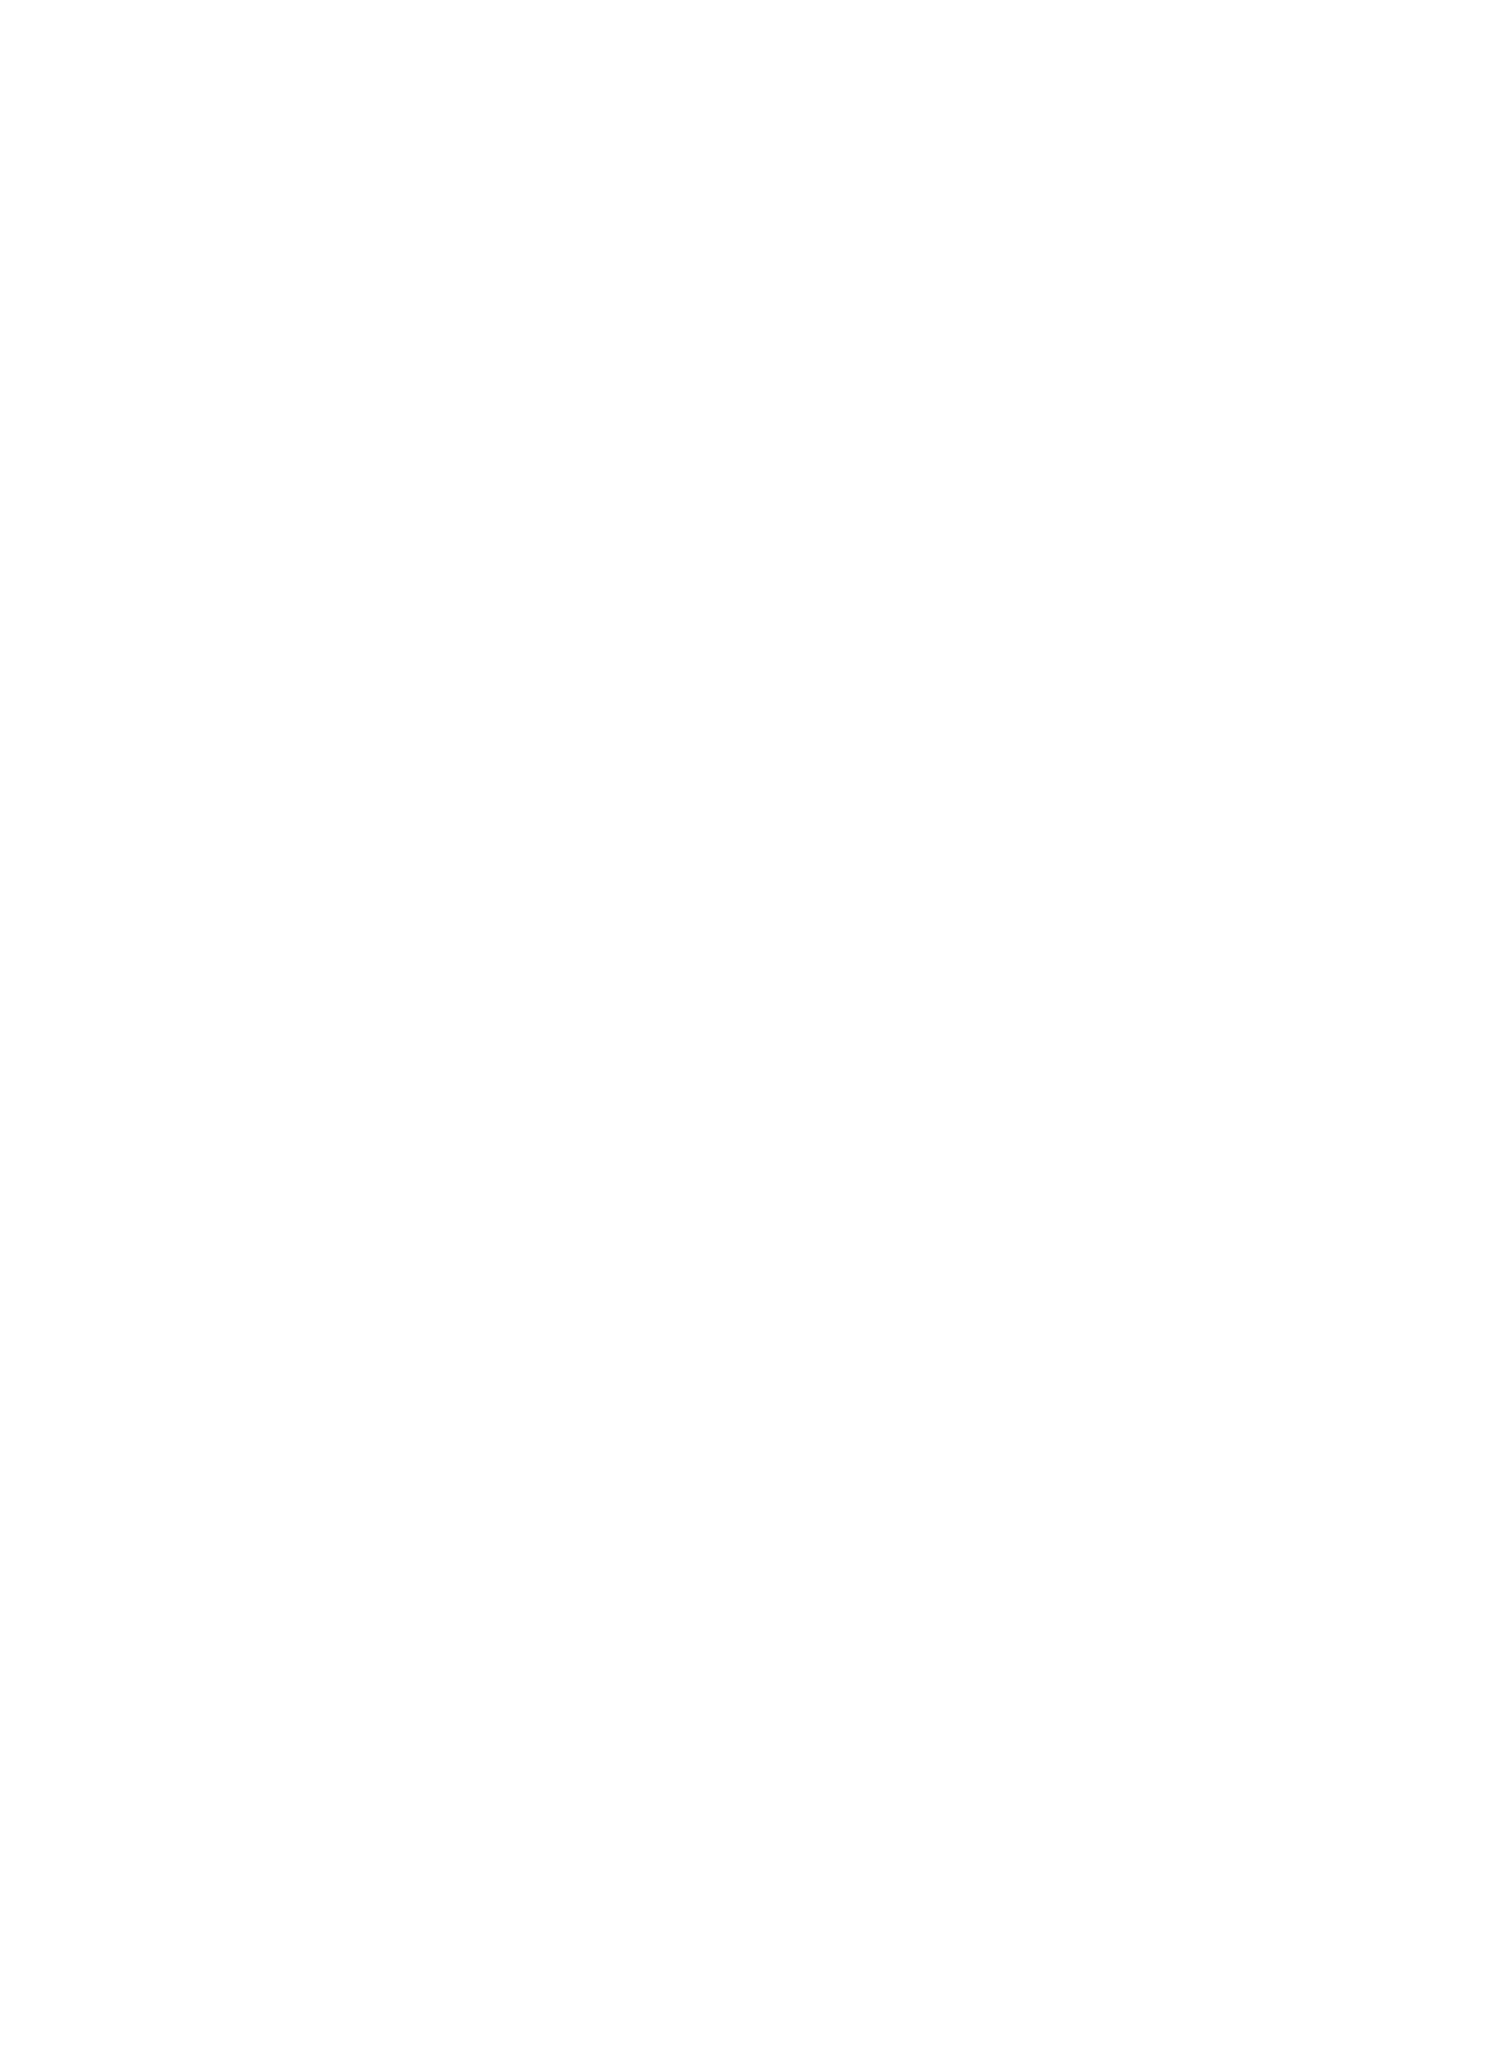 MANDY MARQUARDT